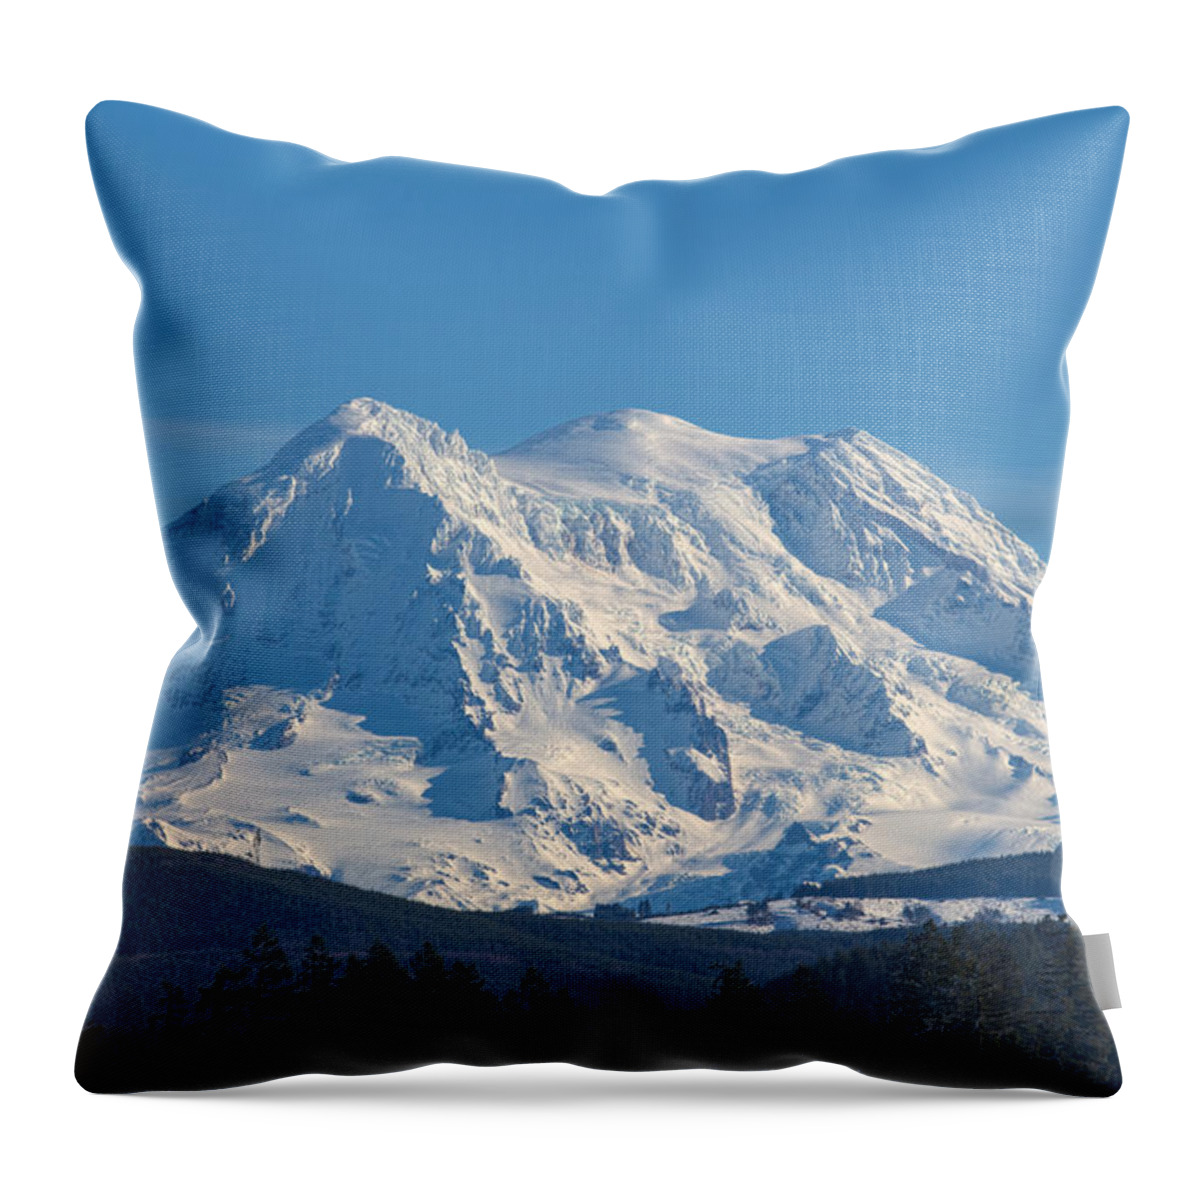 Mt. Rainier Throw Pillow featuring the photograph Mount Rainier by David Gleeson